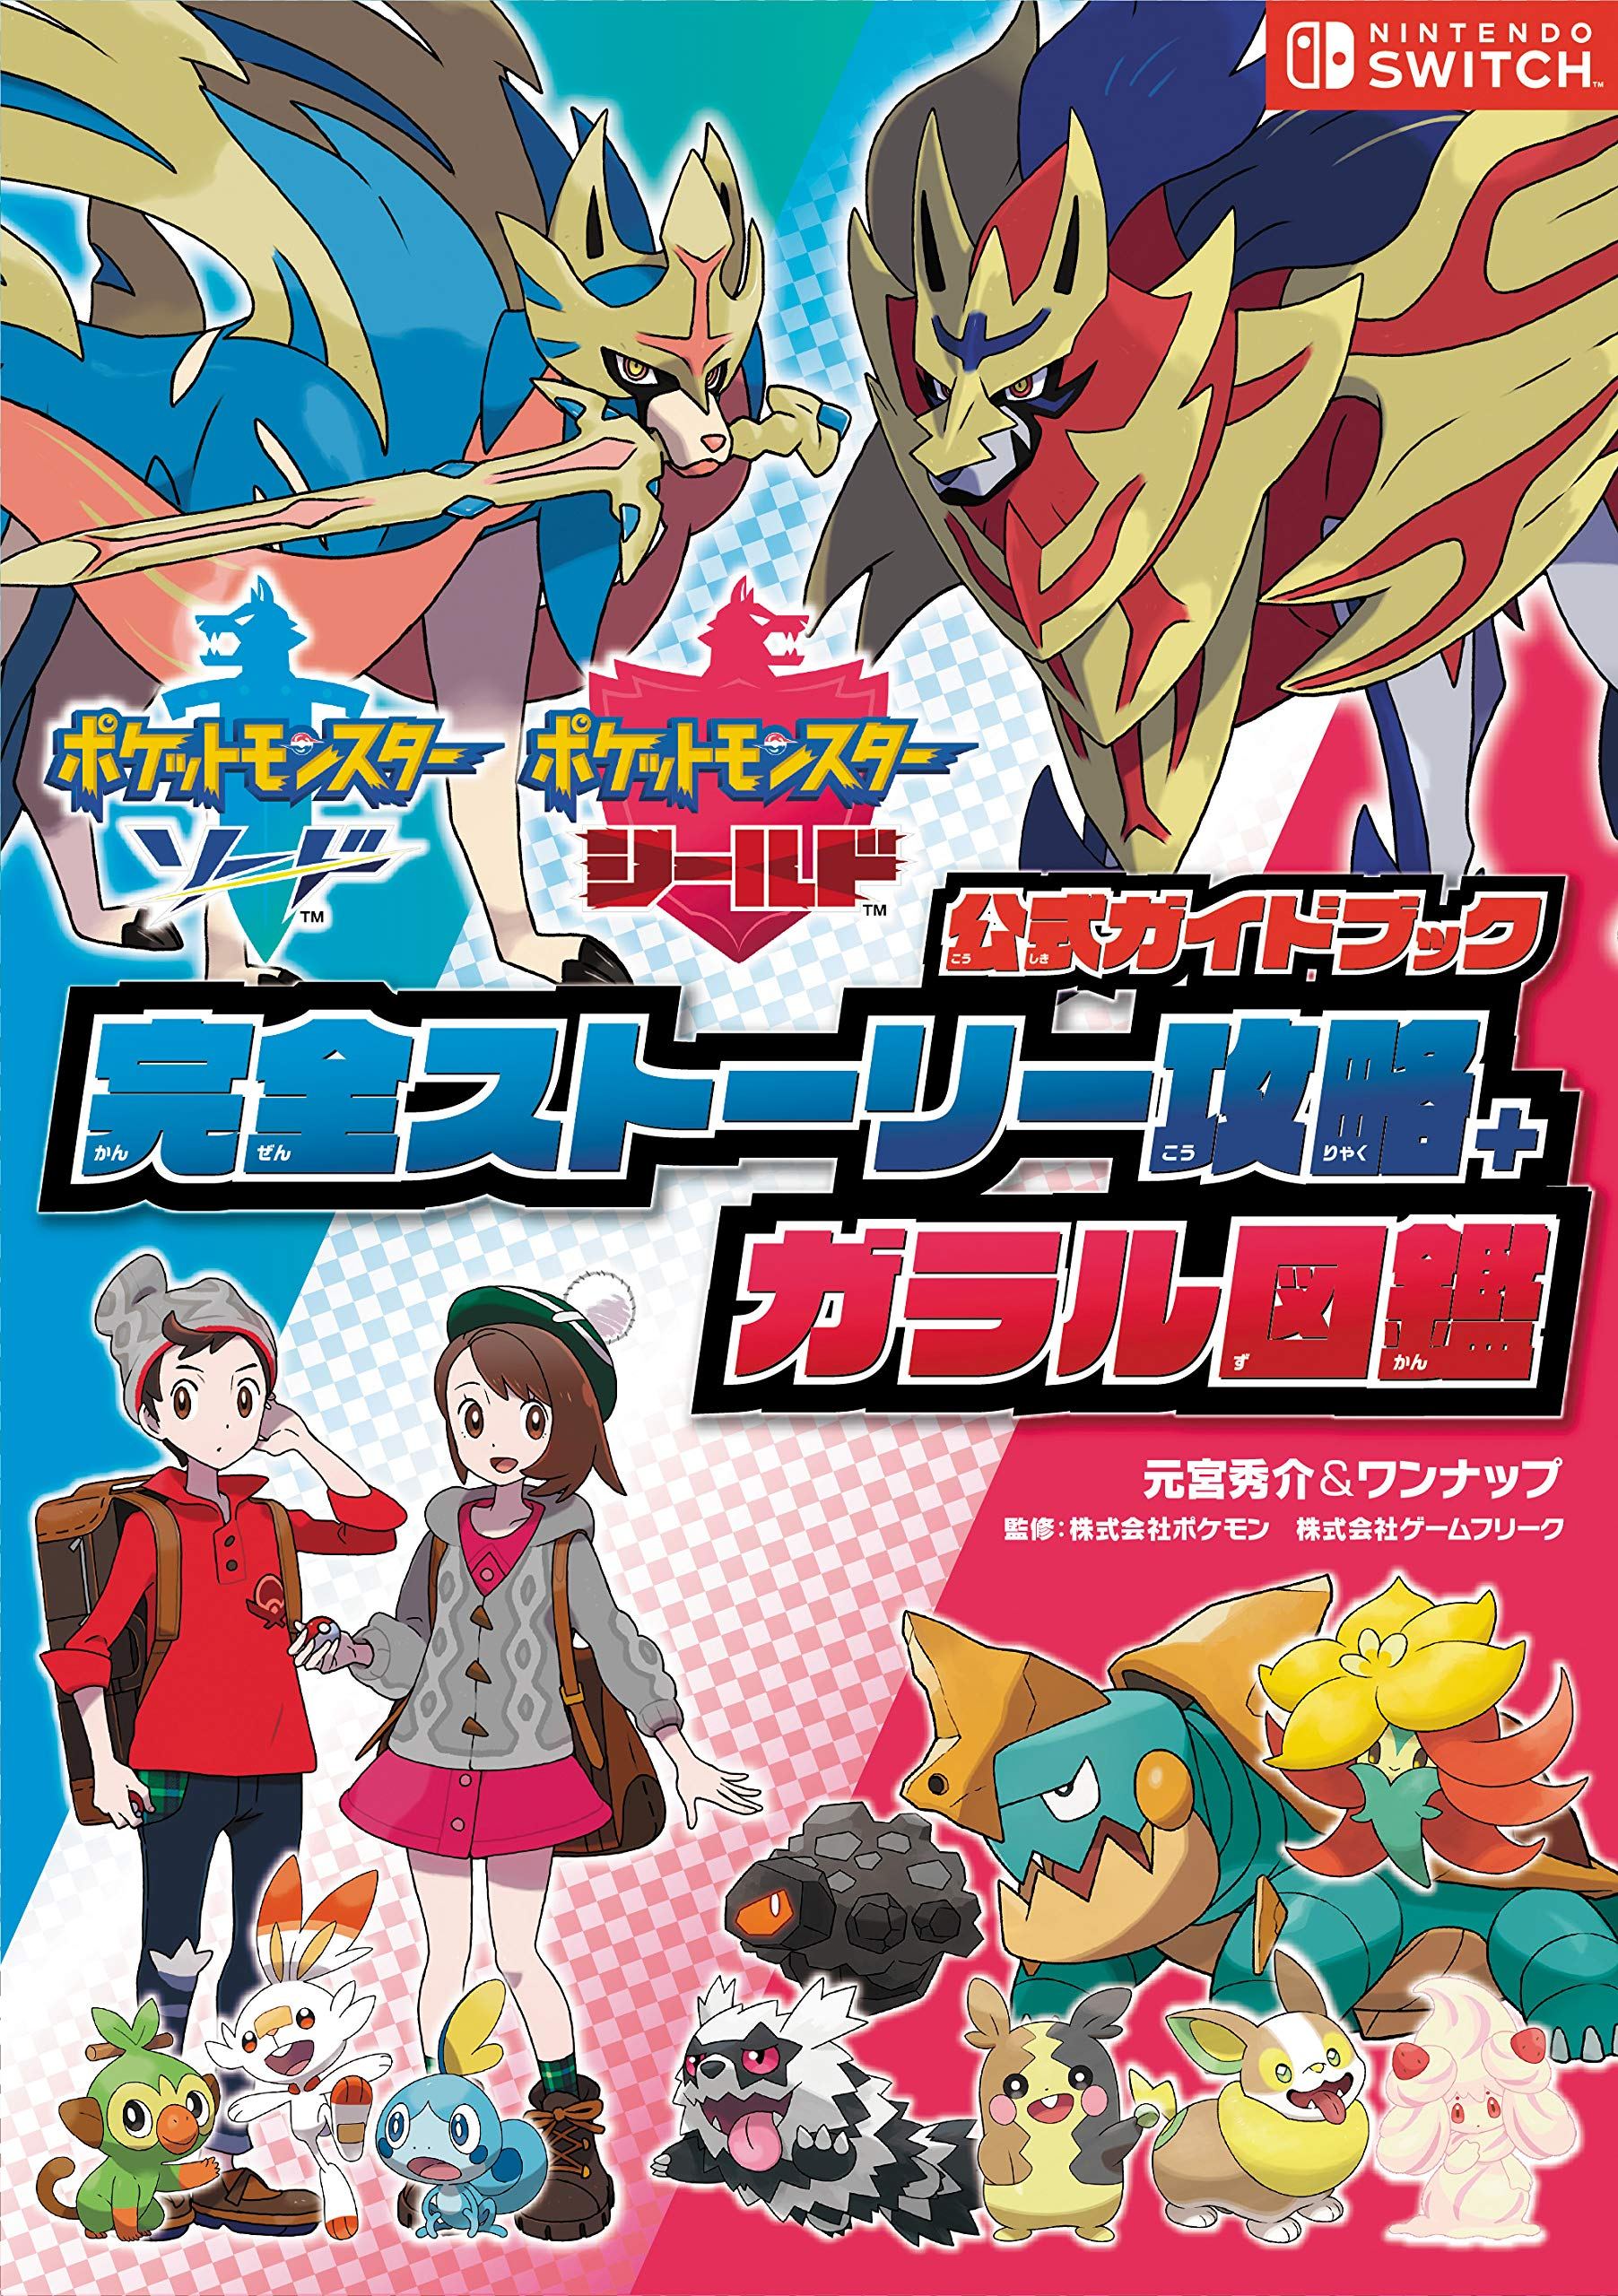 Pokédex Pokémon Sword & Shield The Official Galar Region